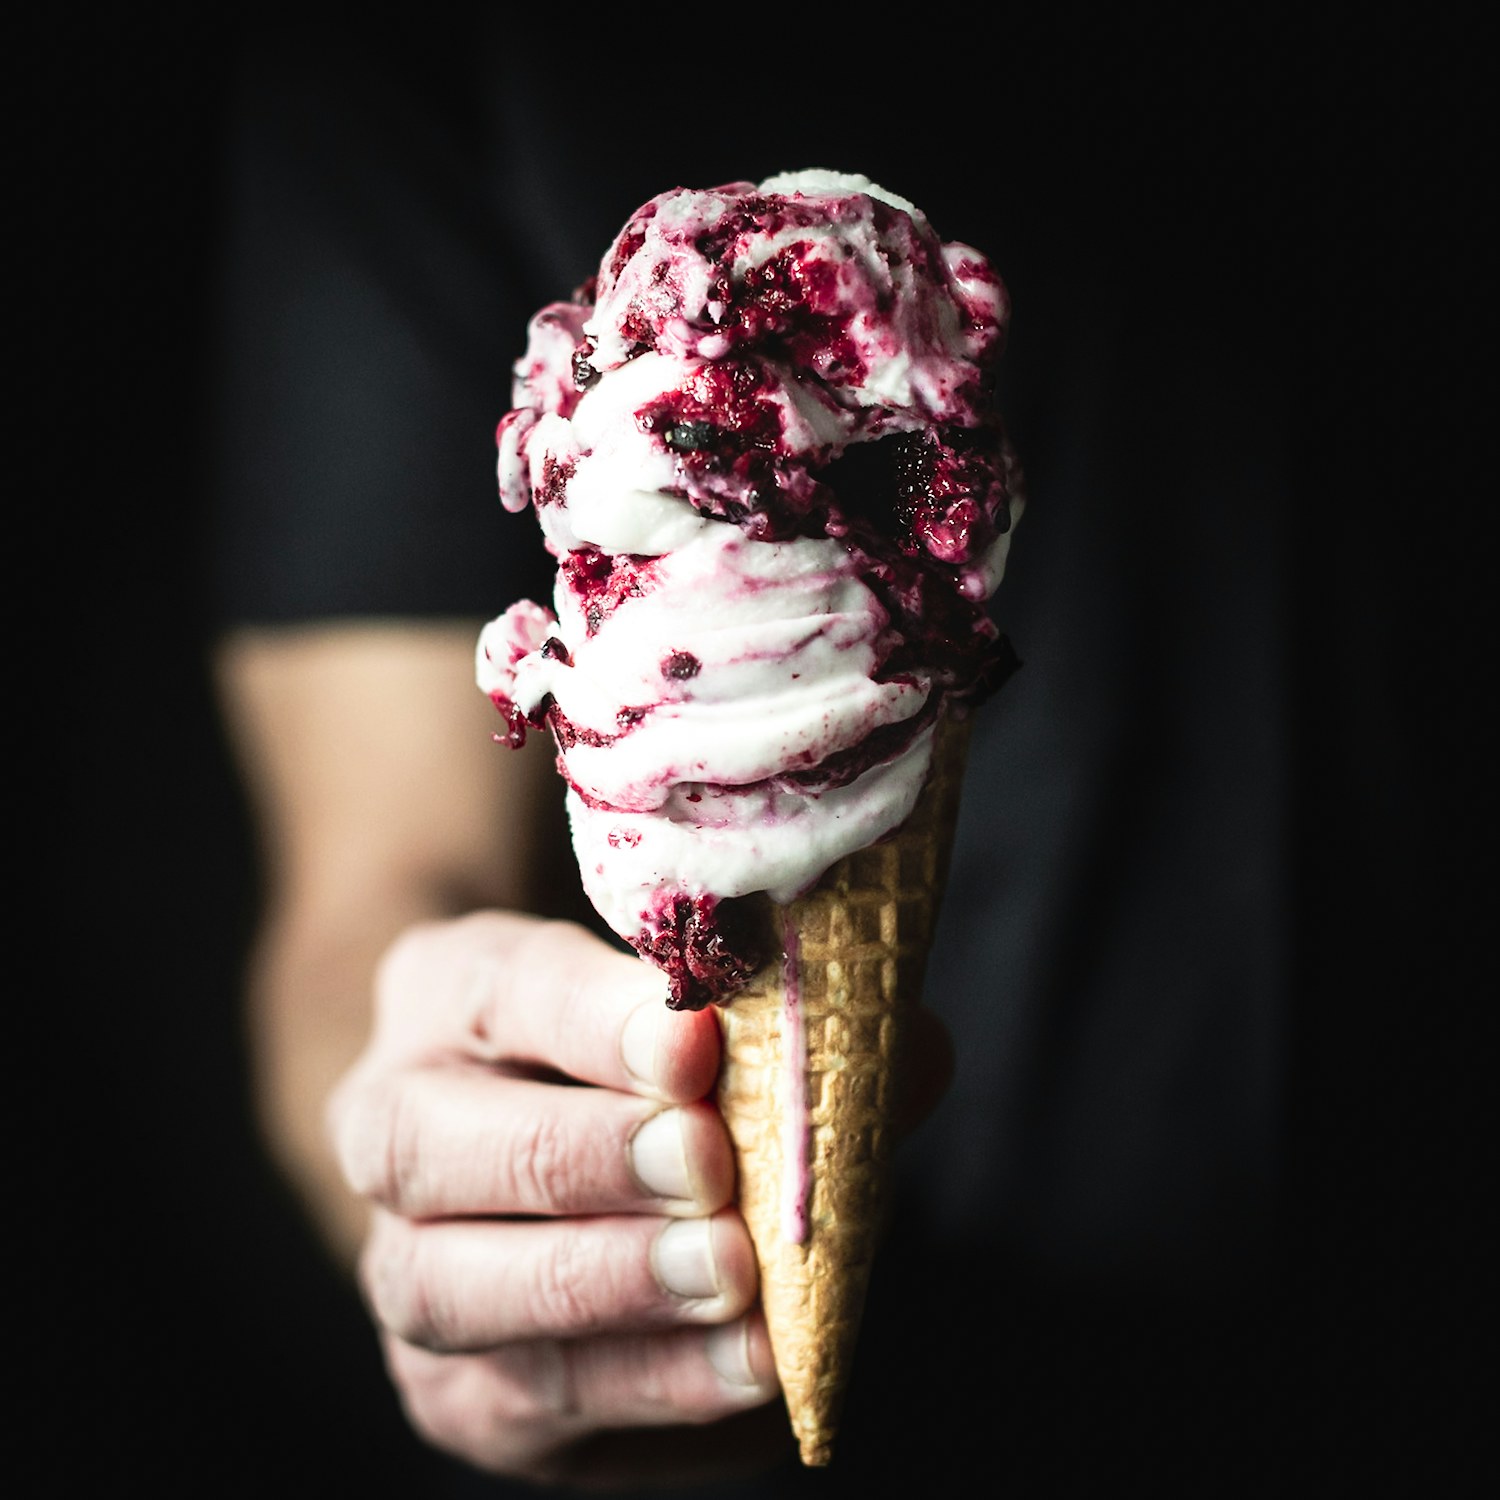 Blackberry ripple ice cream